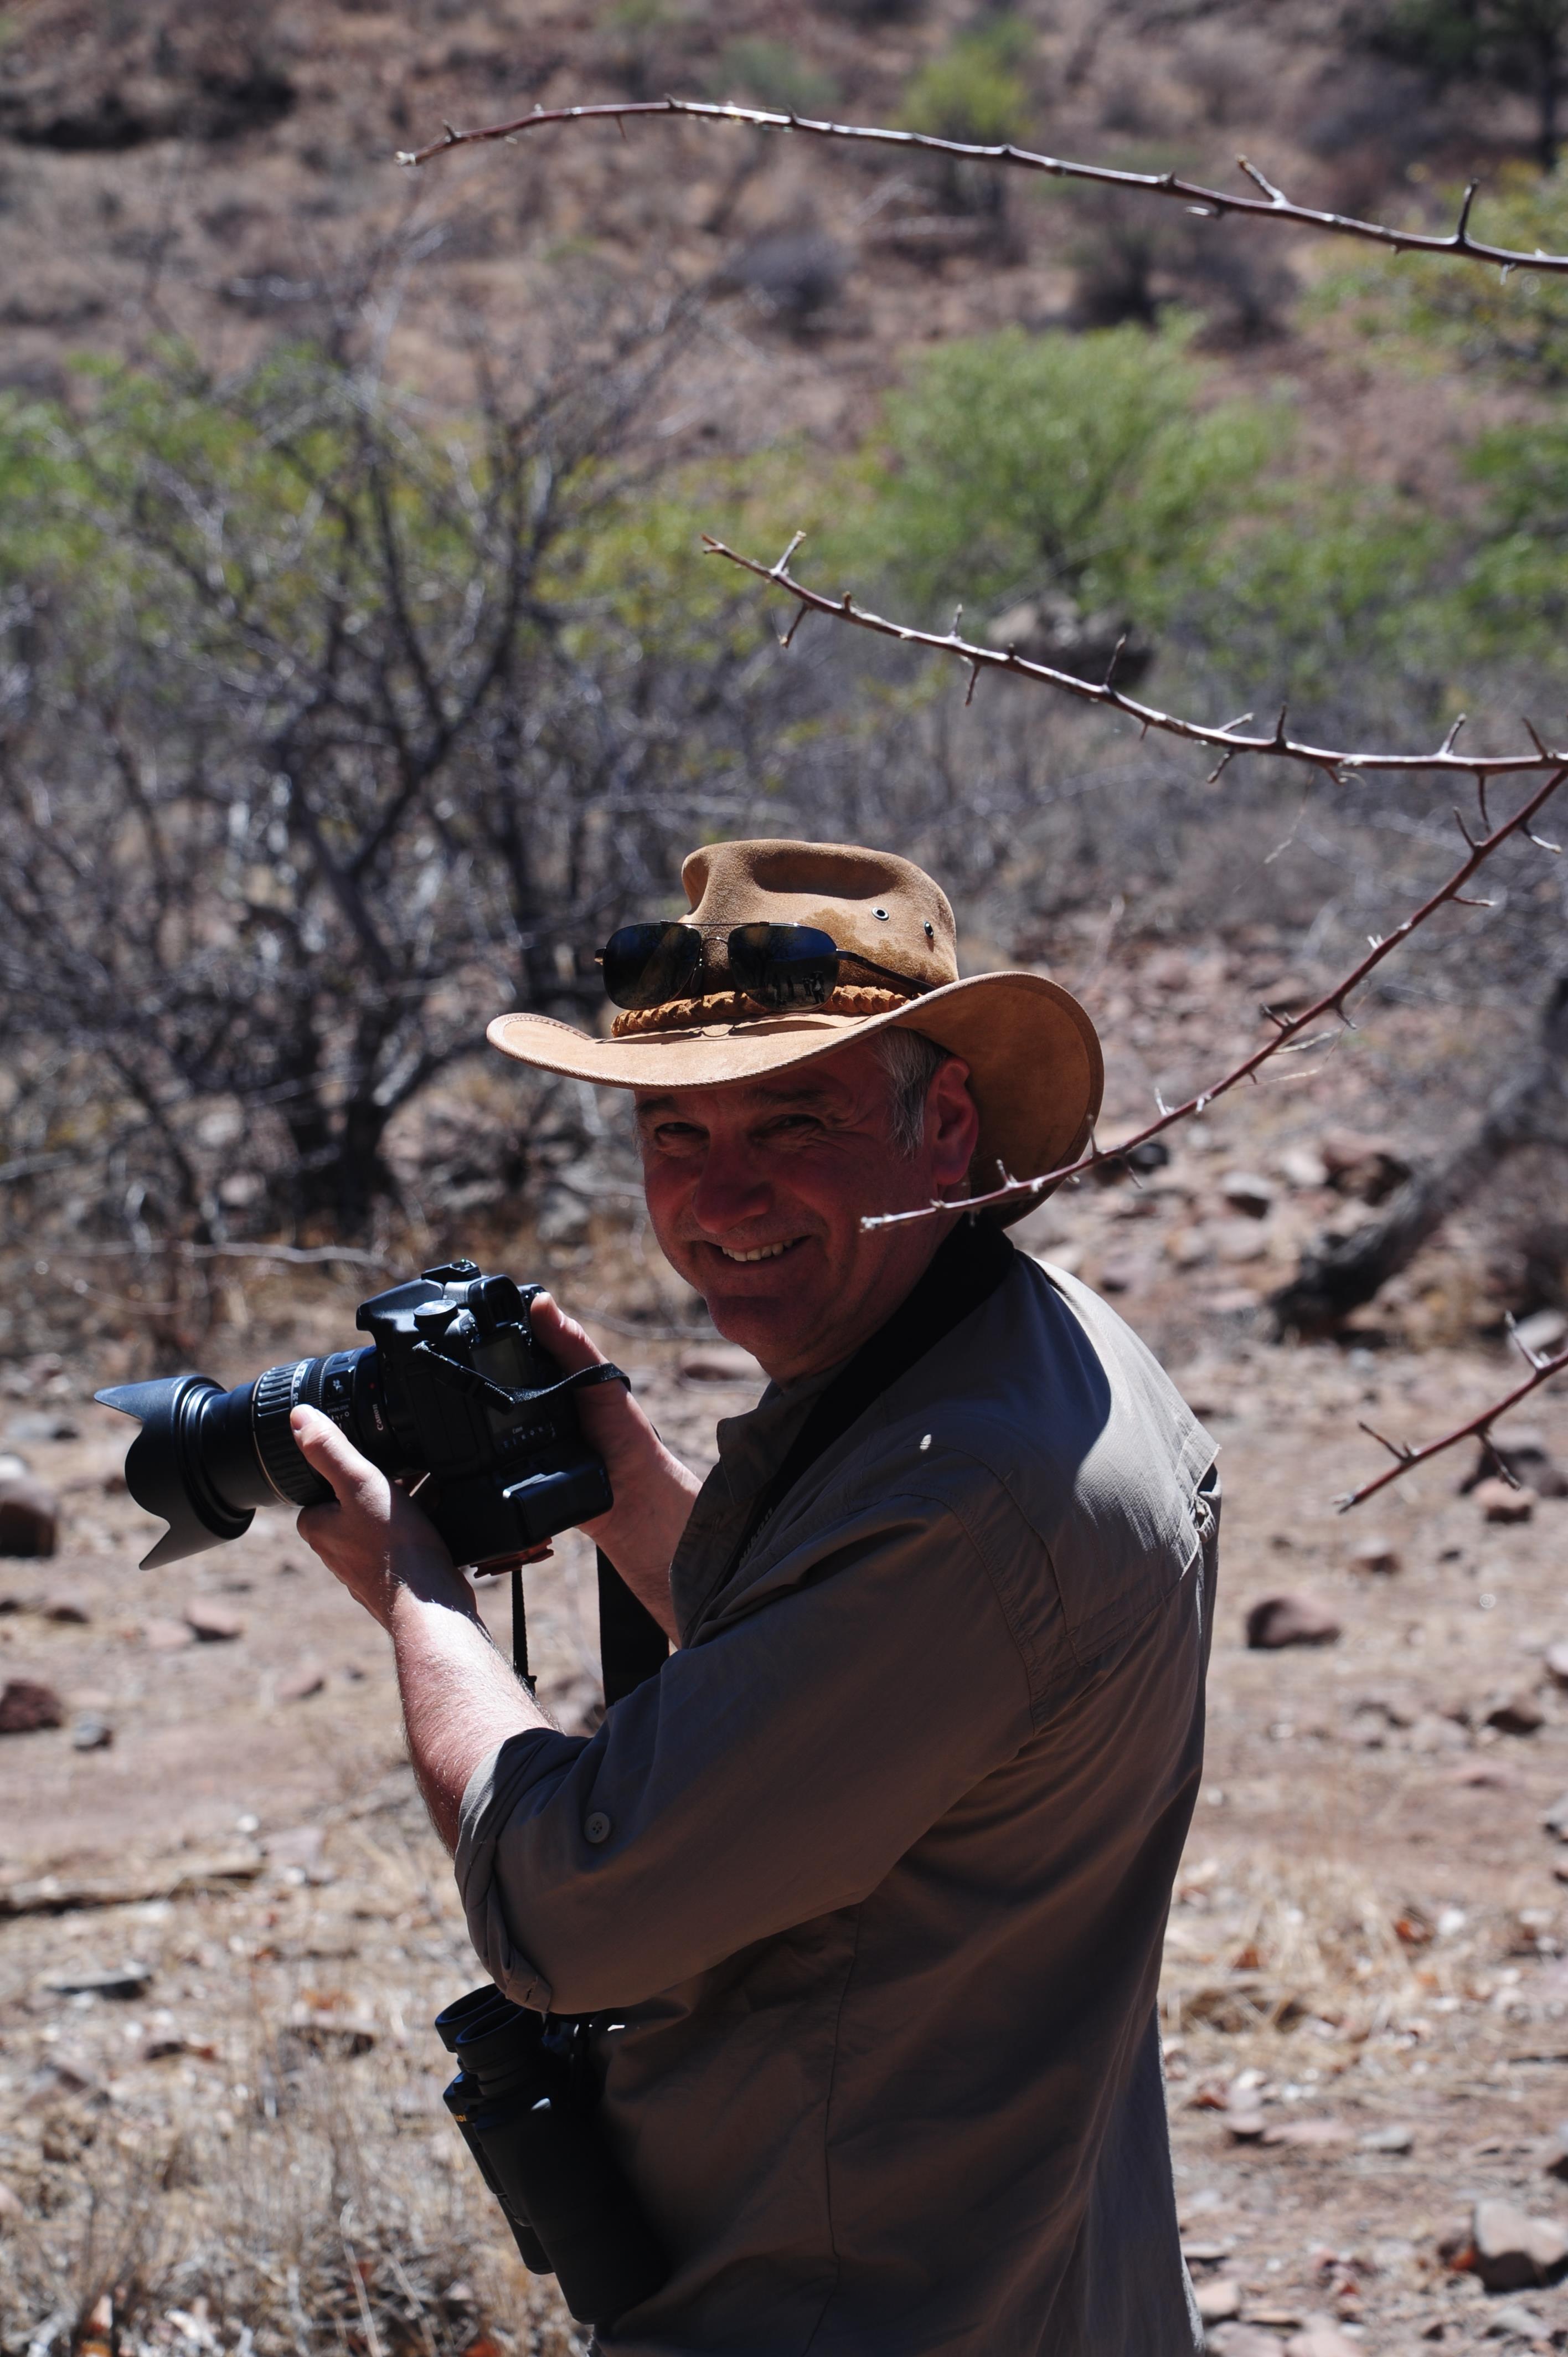 Terry Driscoll on his most recent Safari trip